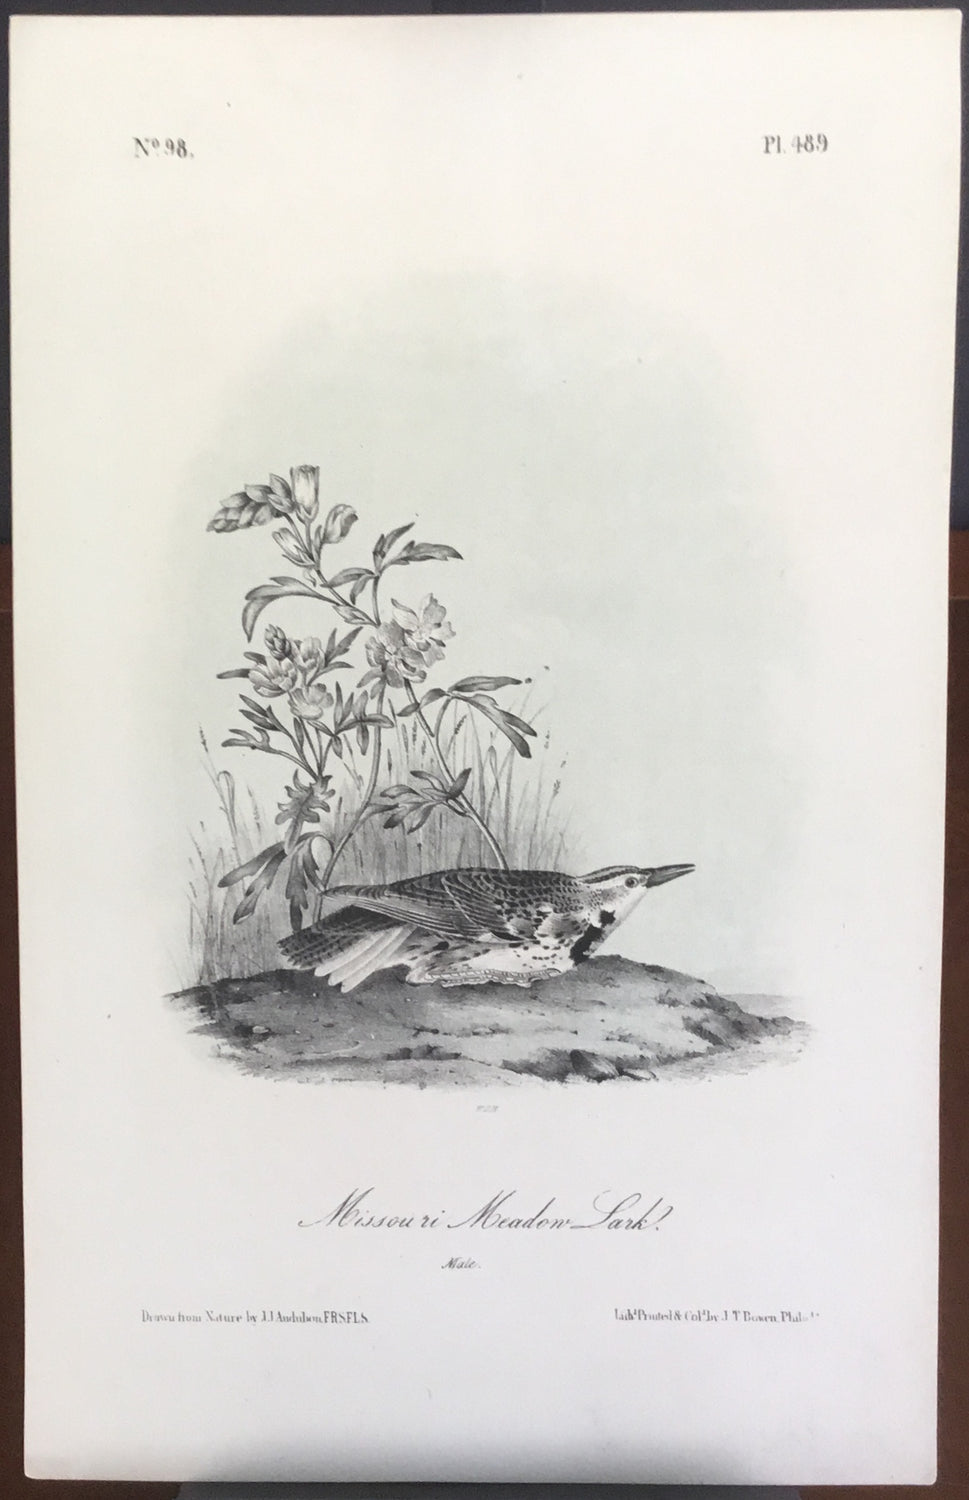 Audubon Octavo Missouri Meadow Lark, plate 489, uncolored test sheet, 7 x 11